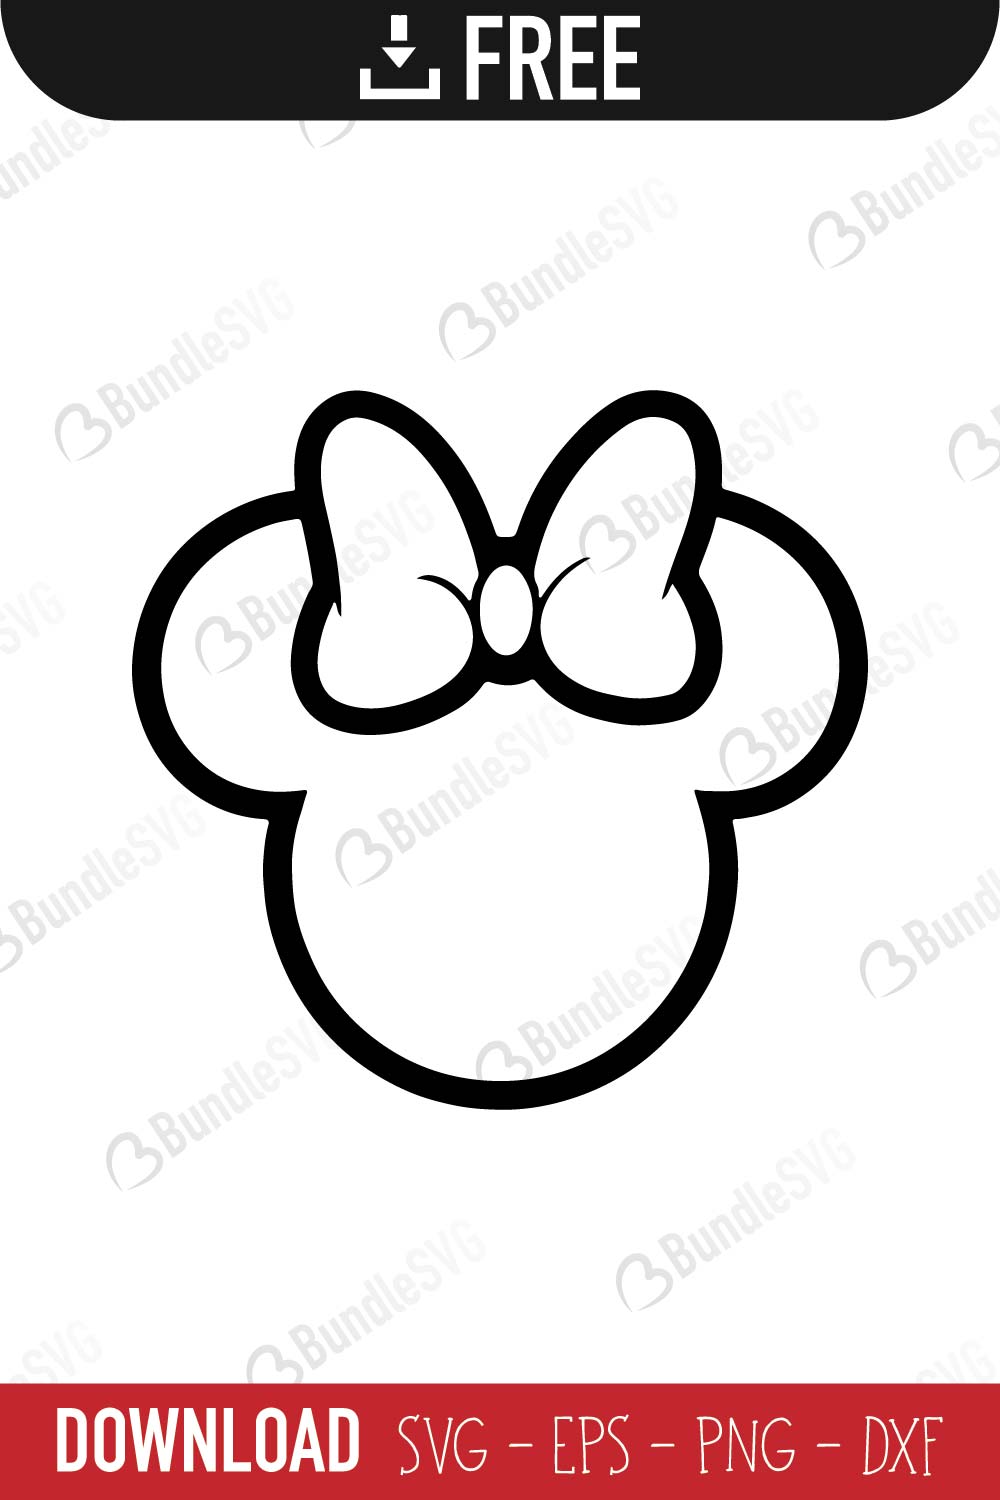 Minnie Outline Head SVG Cut Files Free Download | BundleSVG.com